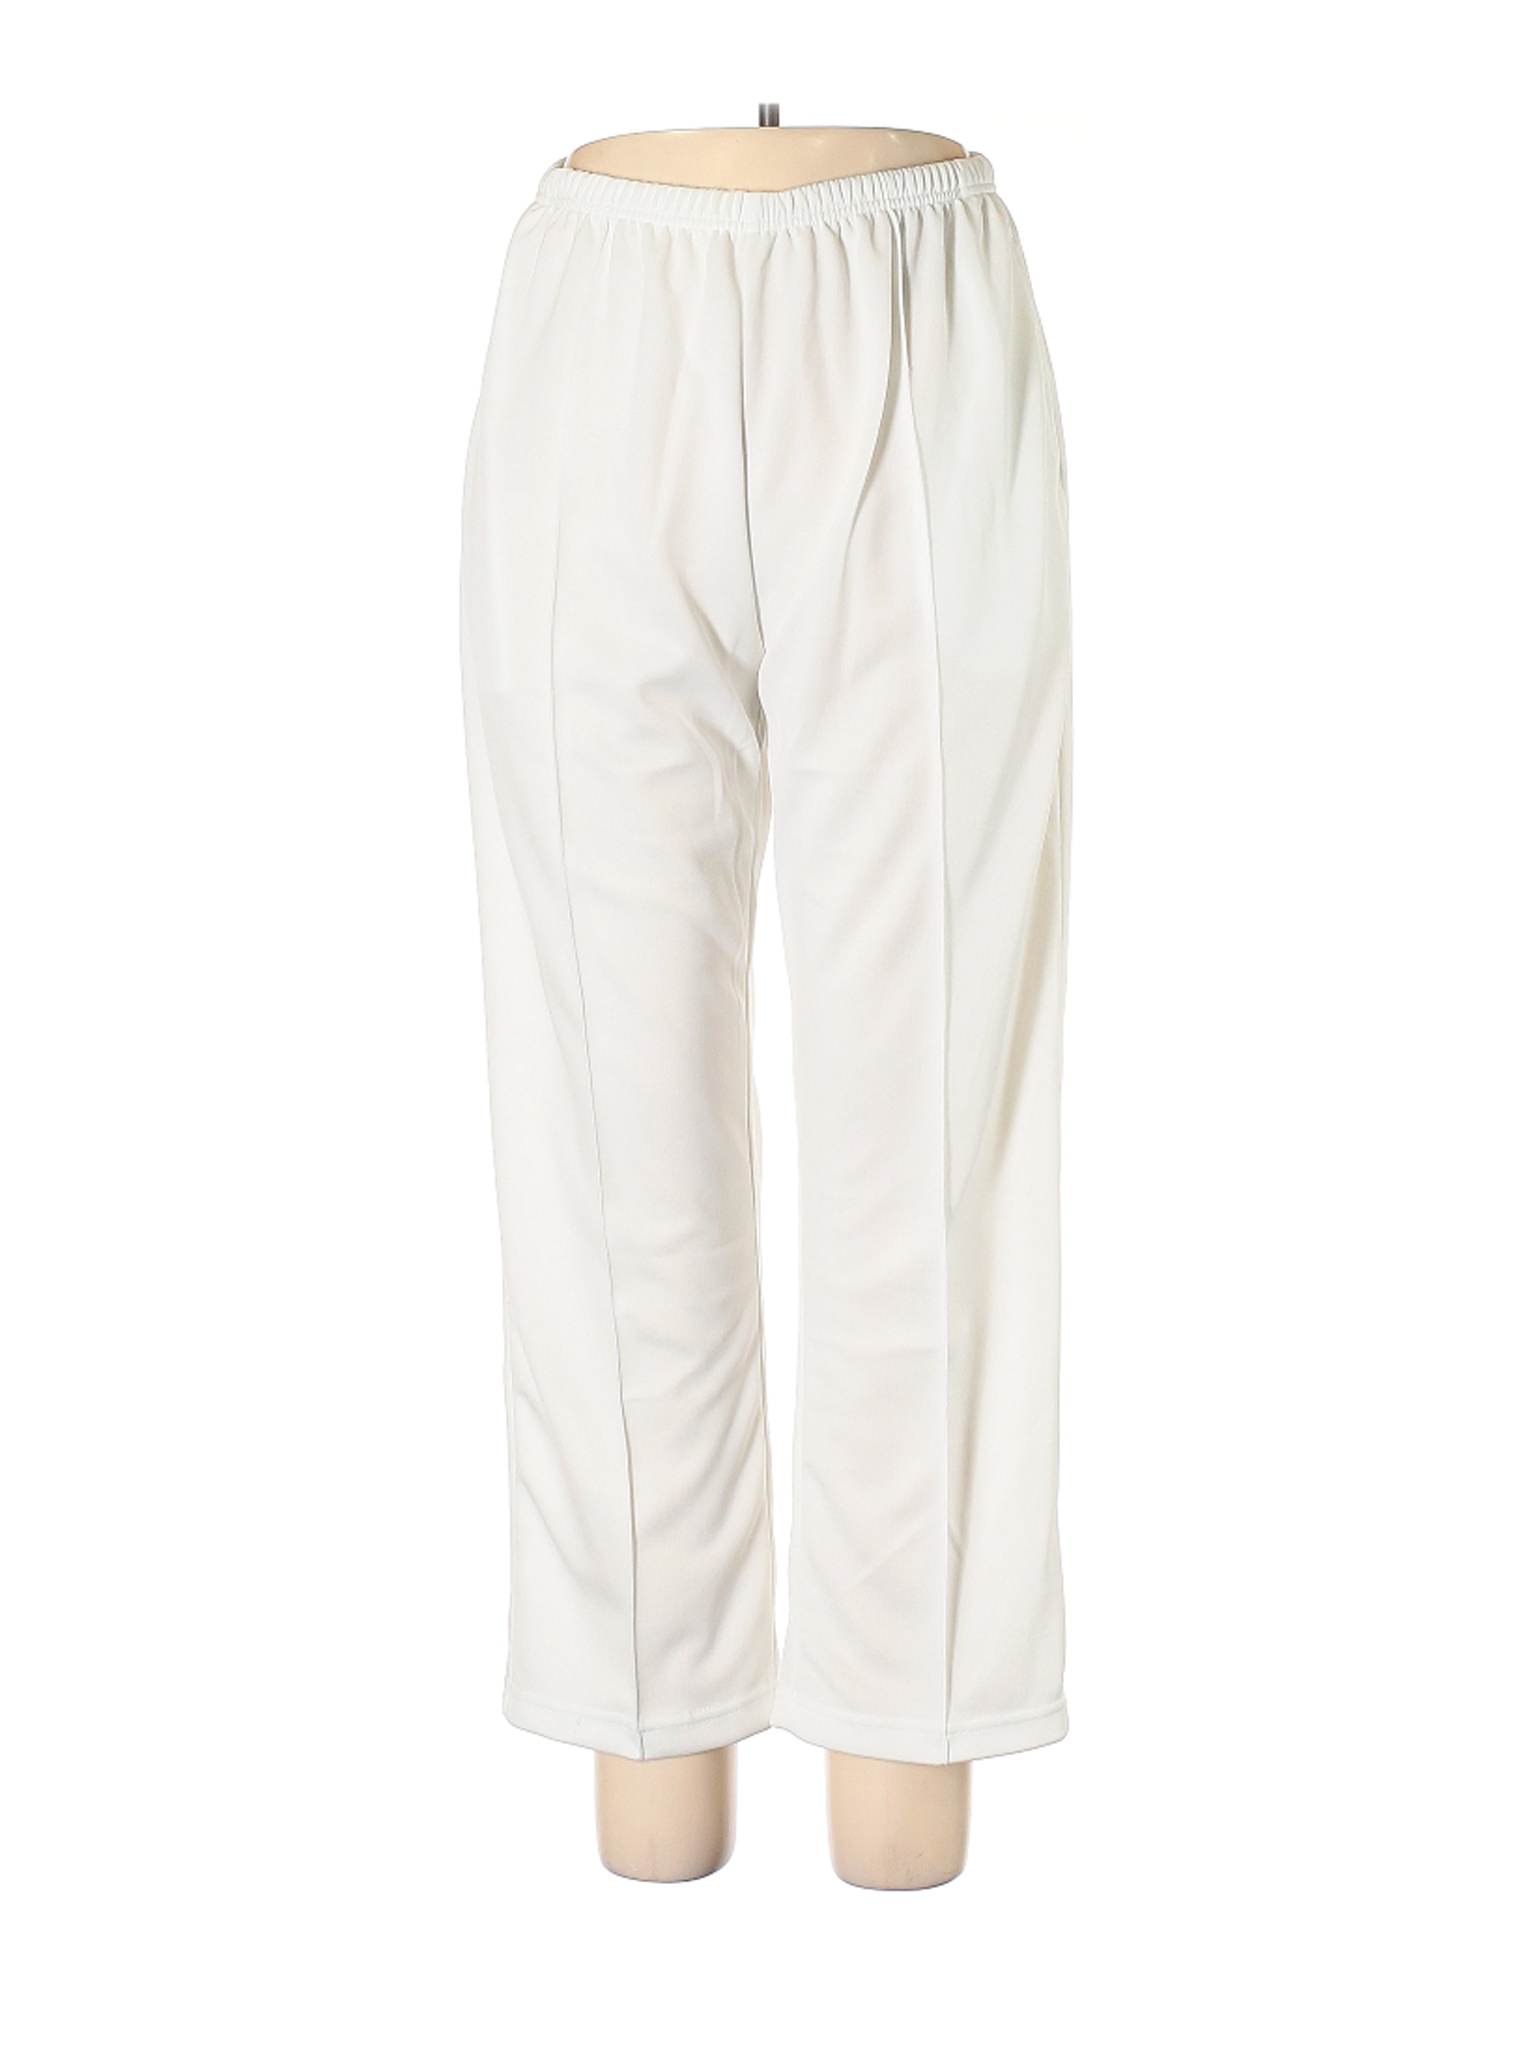 Sara Morgan for Haband Women White Casual Pants 16 Petites | eBay